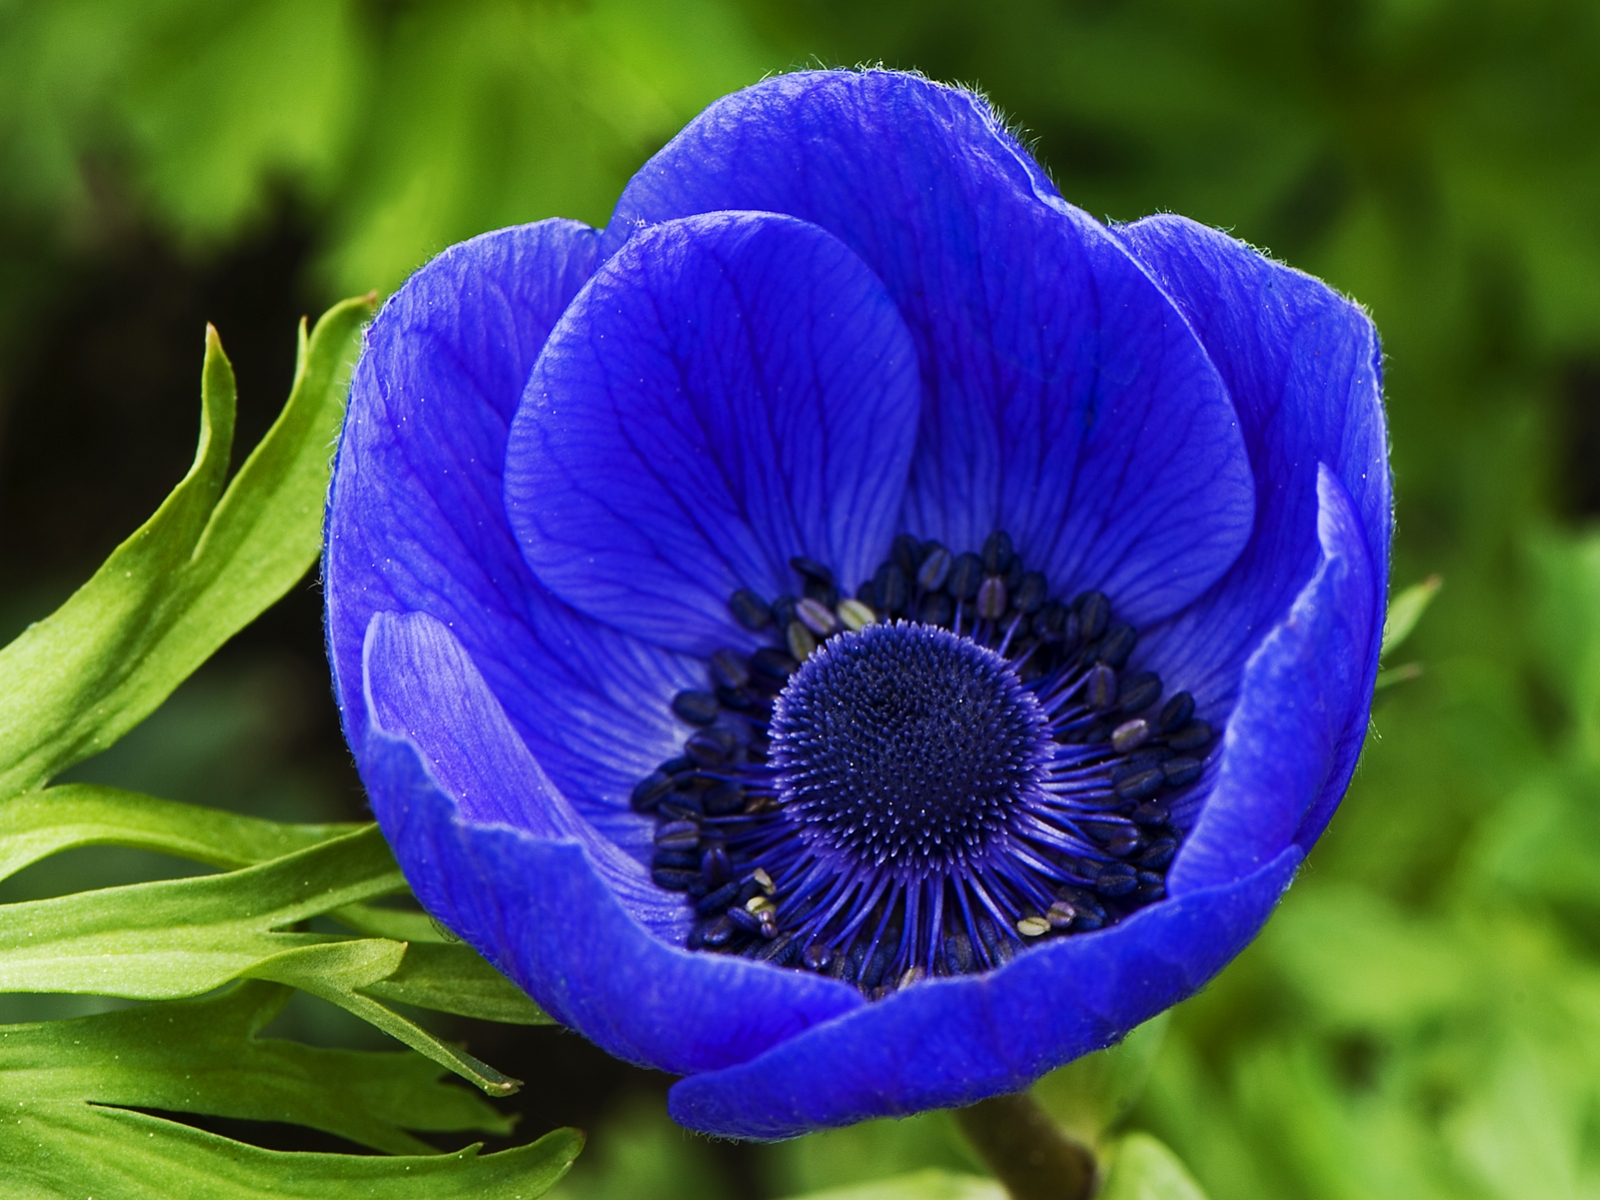 Blue Poppy, a blue flower